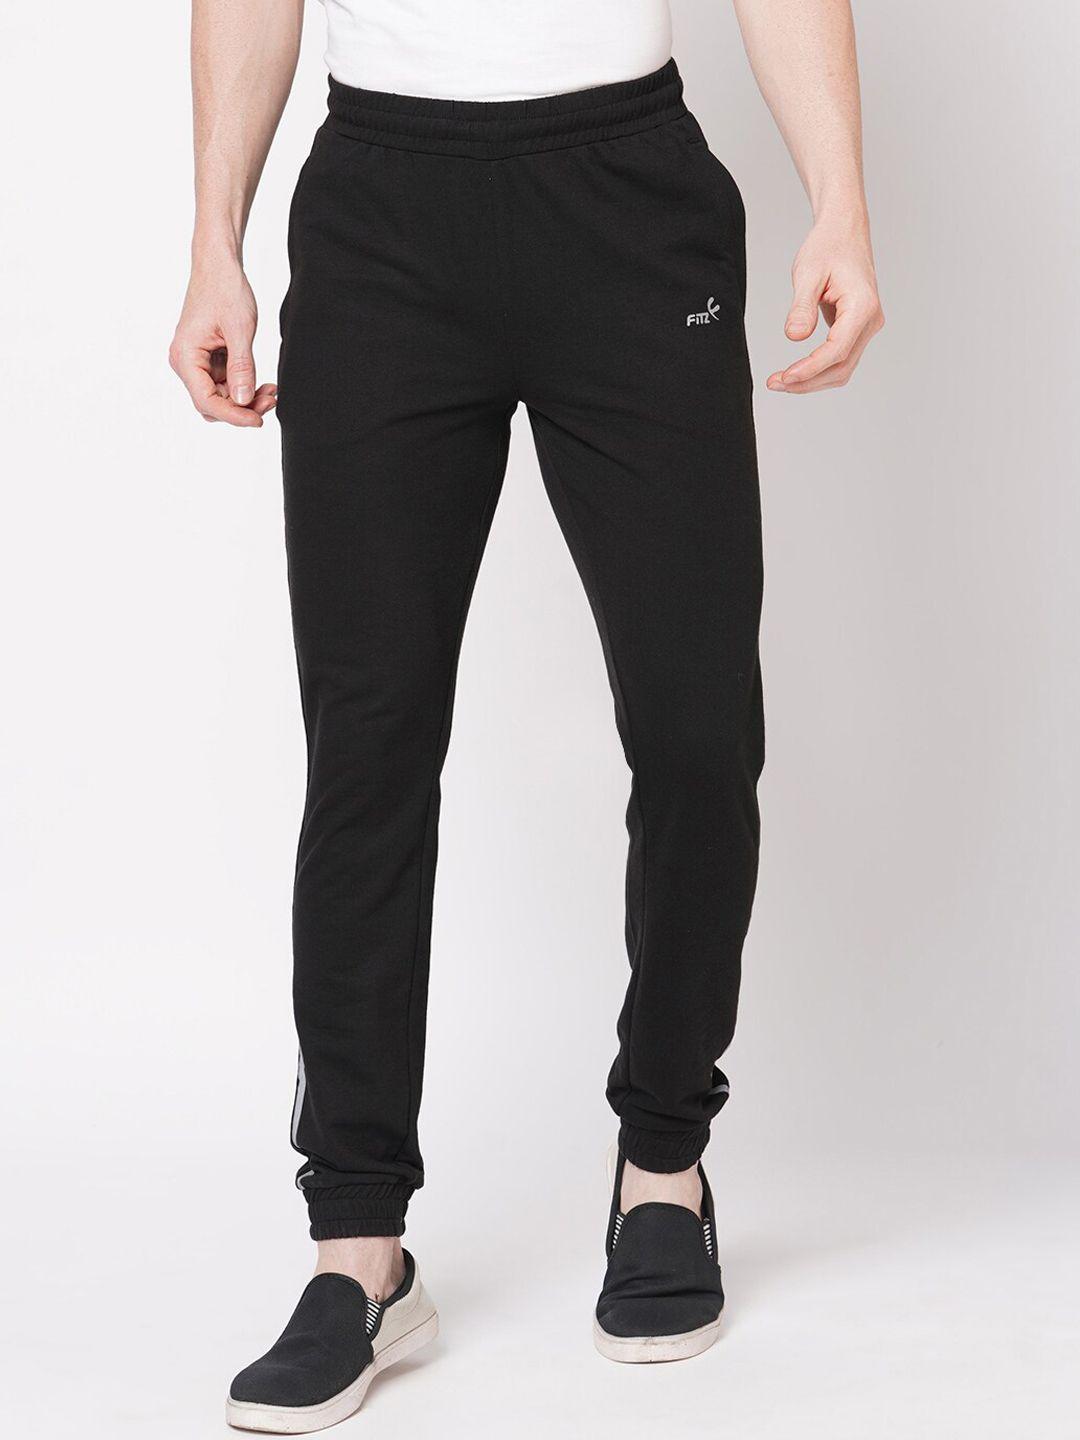 fitz-men-black-&-white-brand-logo-printed-cotton-joggers